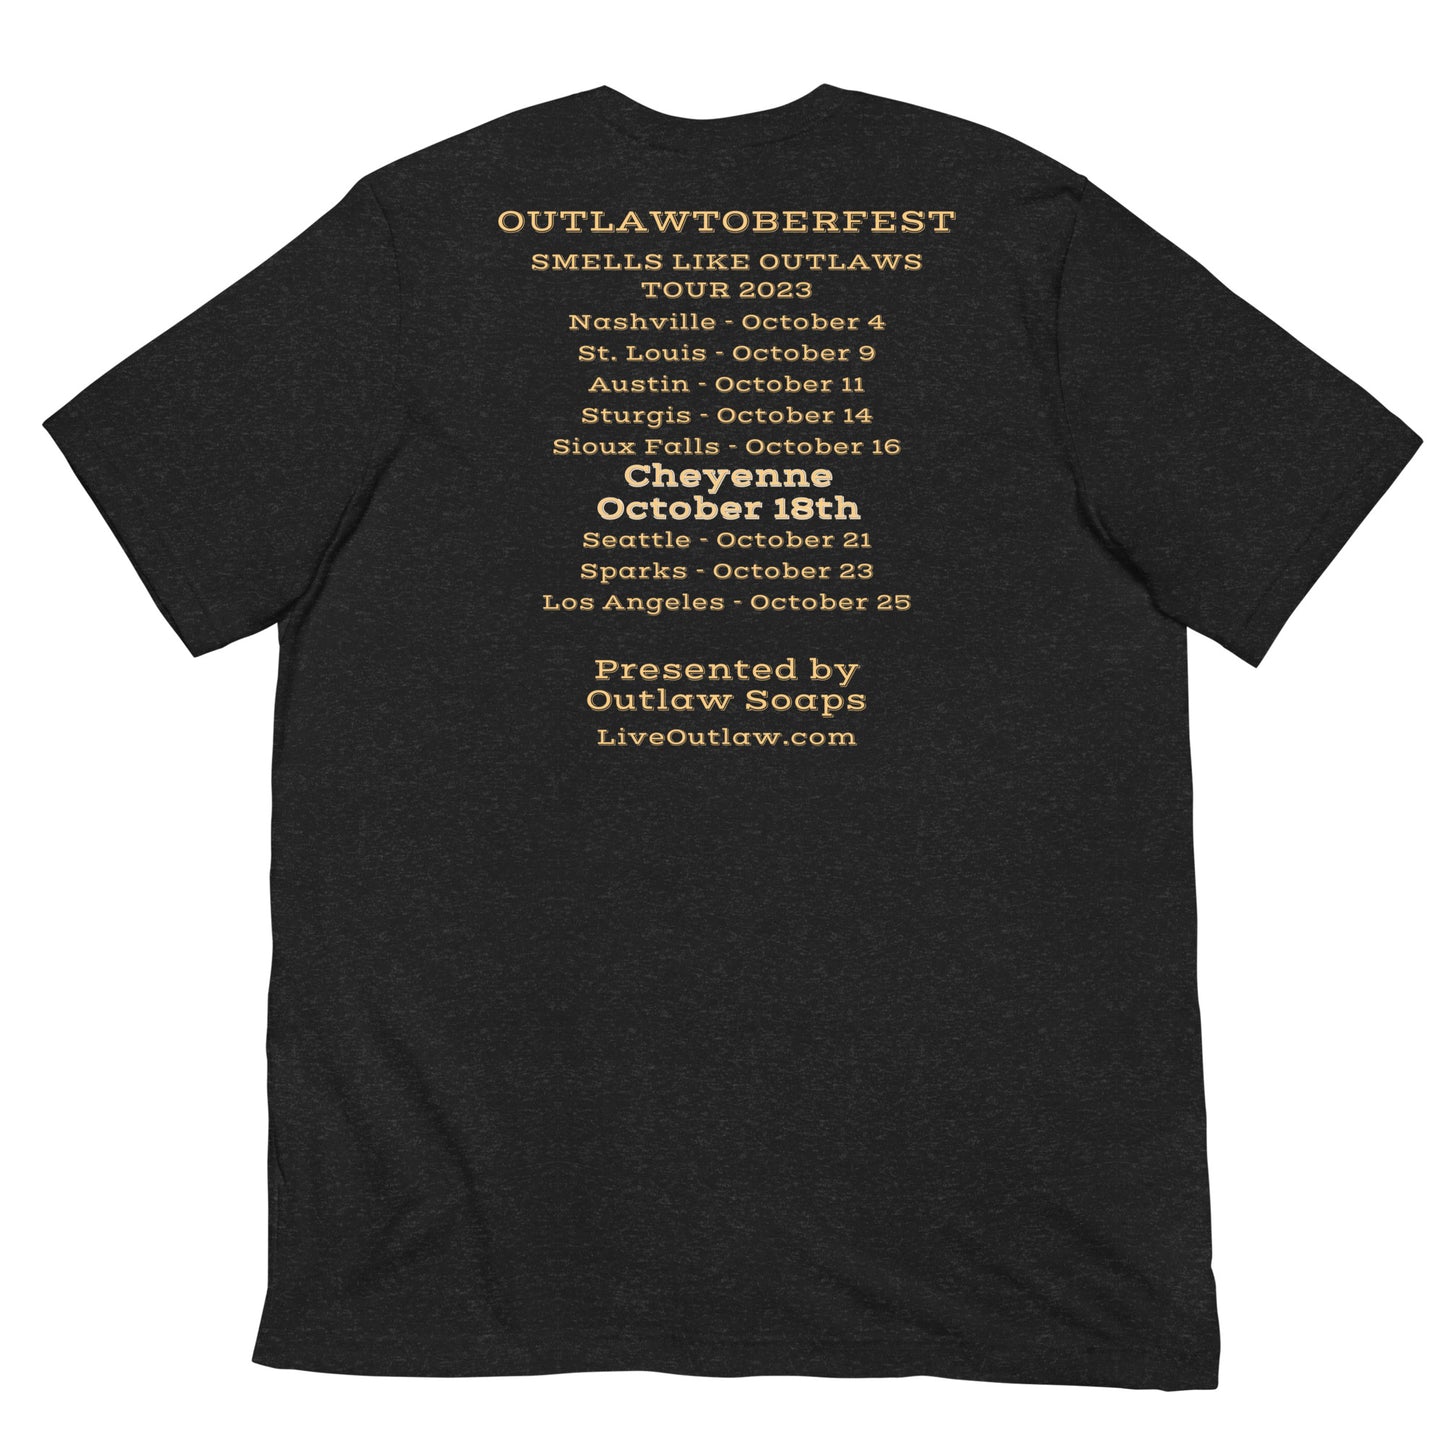 Cheyenne T-Shirt - Outlawtoberfest 2023 - Smells like Outlaws Tour T-Shirt